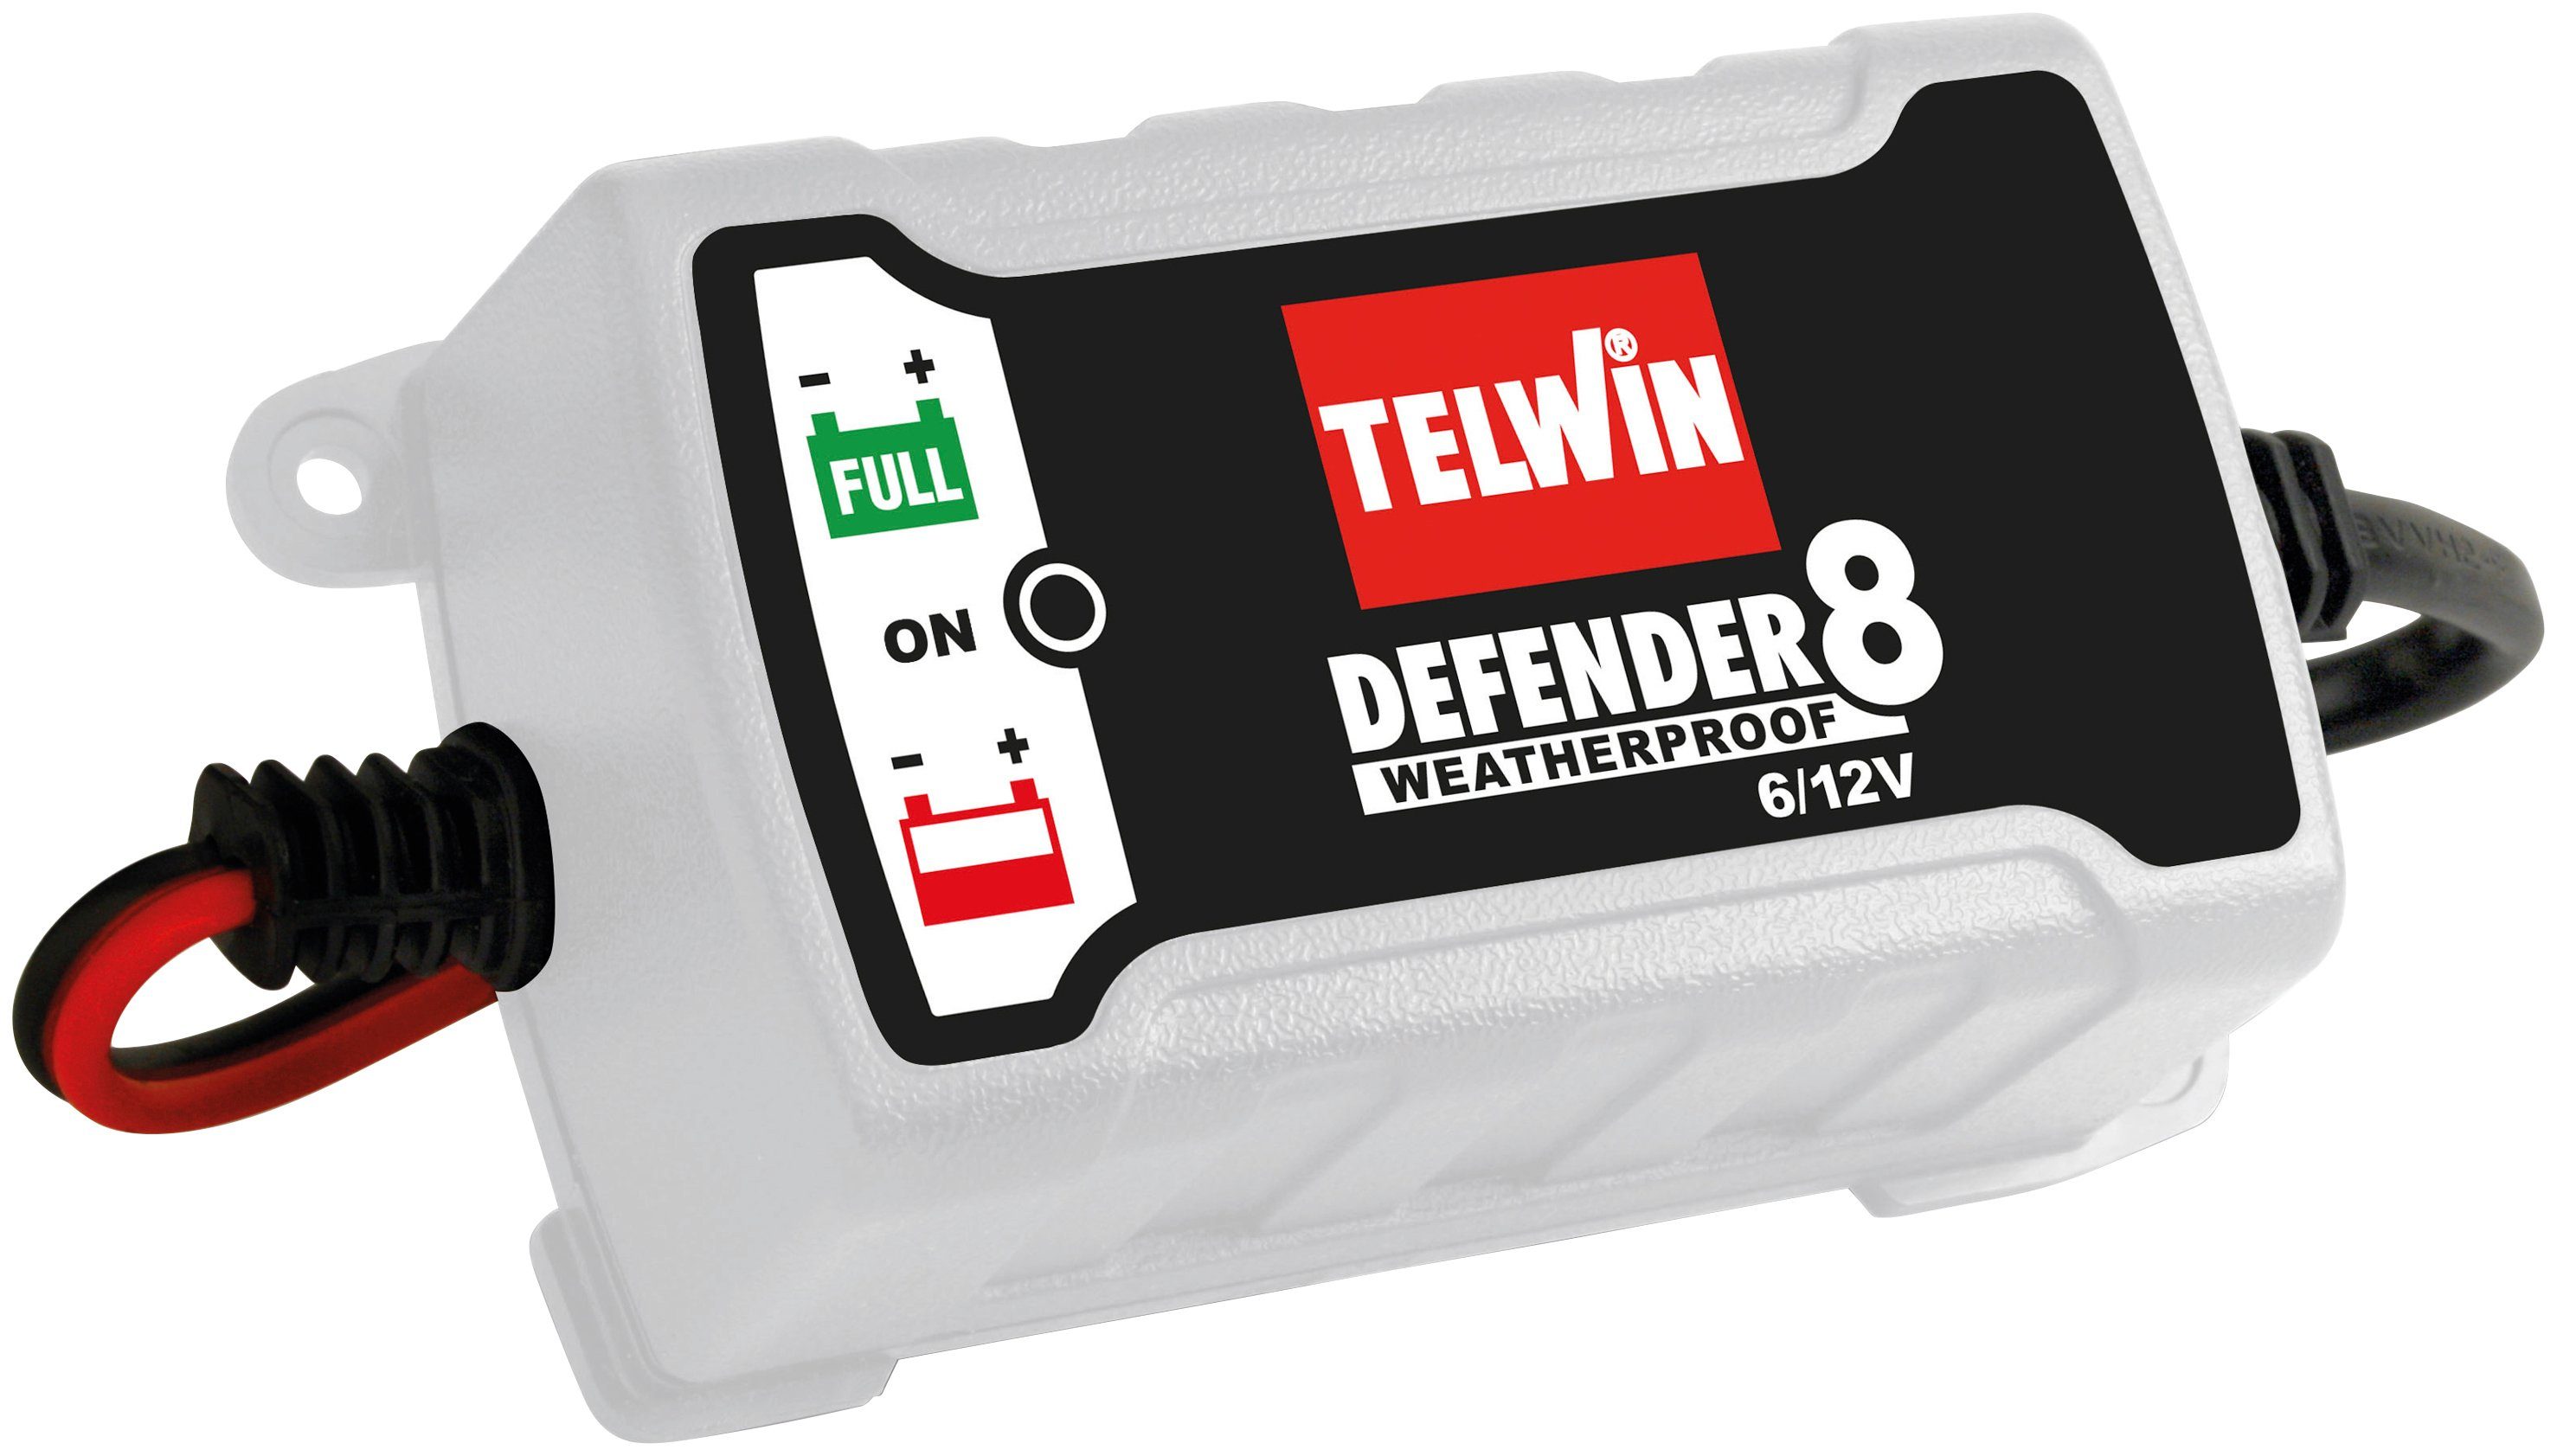 TELWIN DEFENDER 12 Autobatterie-Ladegerät (Spannung: 6V / 12V, Ladestrom: 2/4 A) | Autobatterie-Ladegeräte